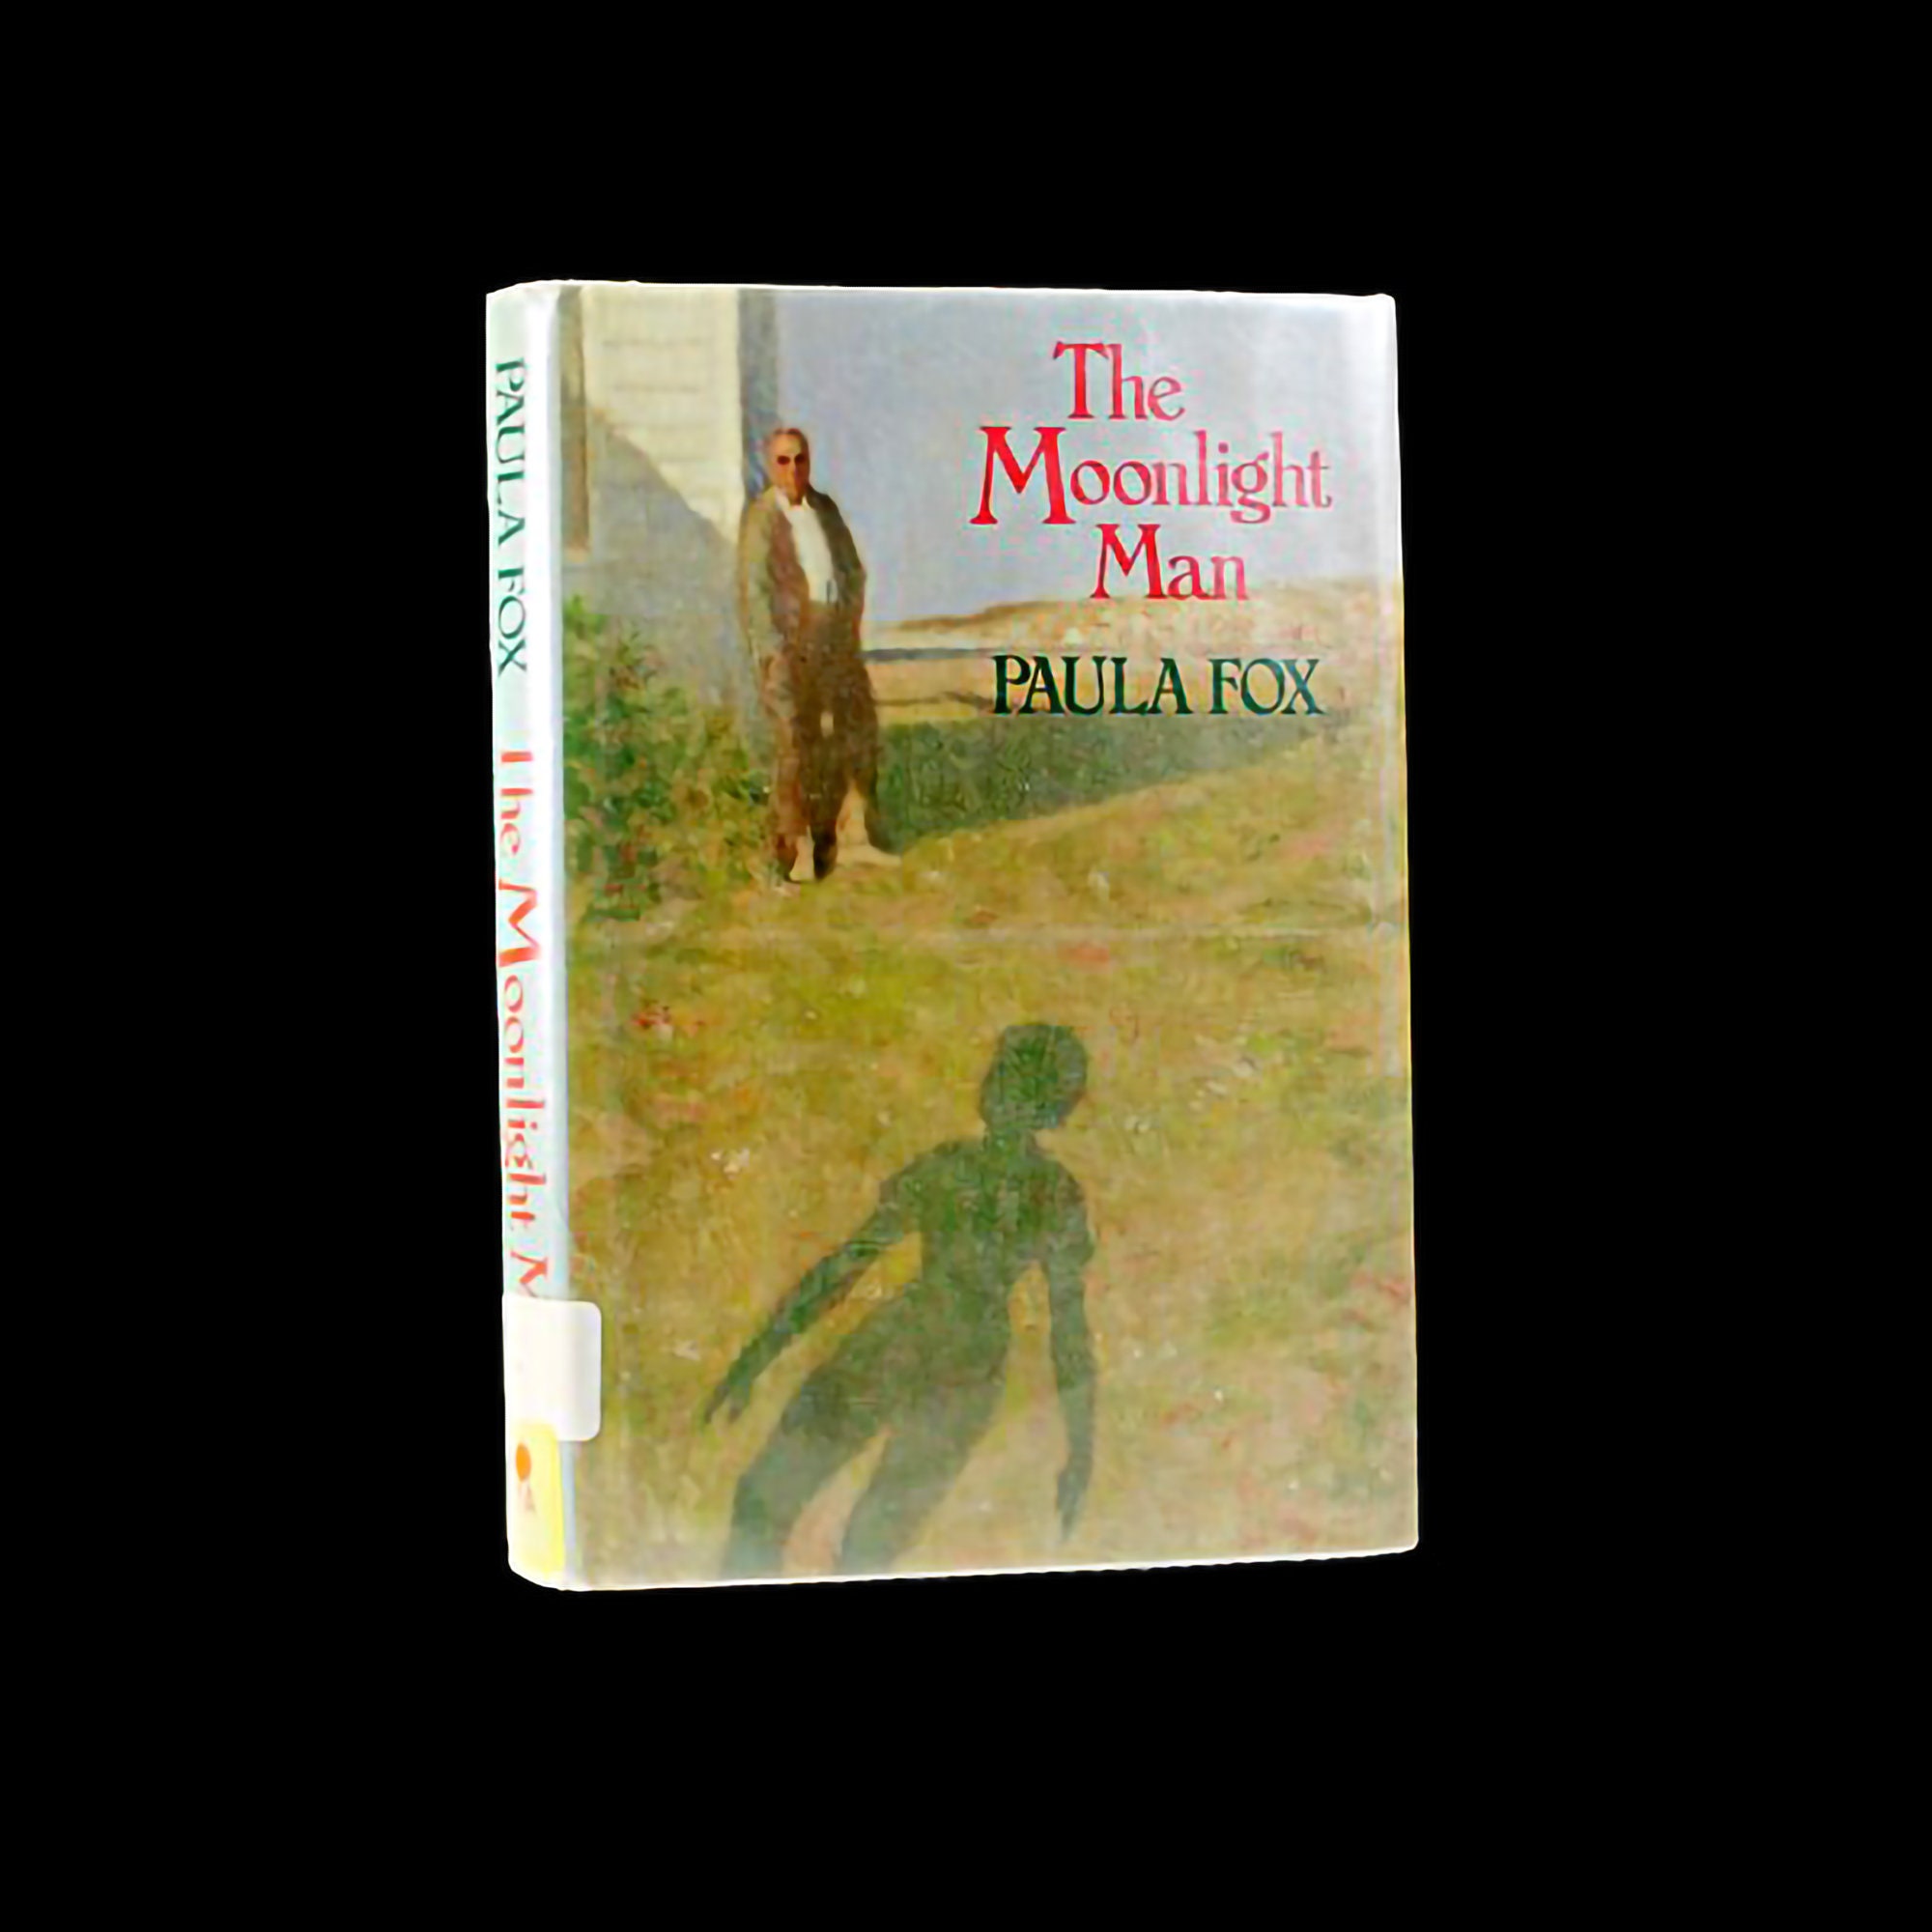 Hardcover Book, The Moonlight Man, Paula Fox, First Edition